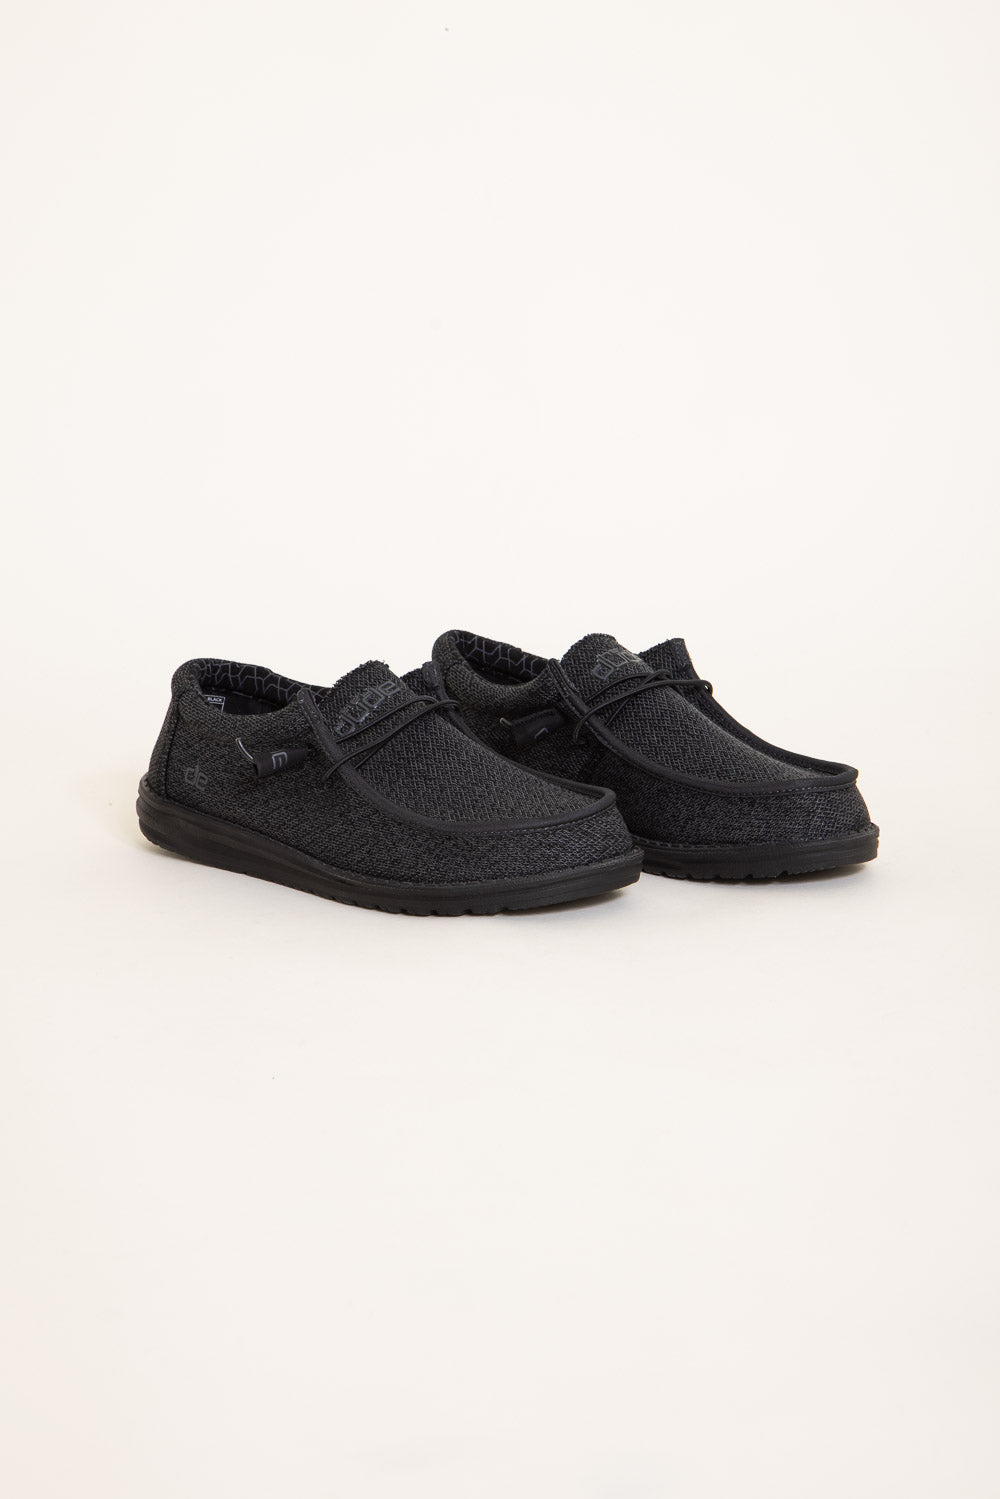 HEYDUDE Men's Wally Sox Micro Shoes in Total Black – Glik's